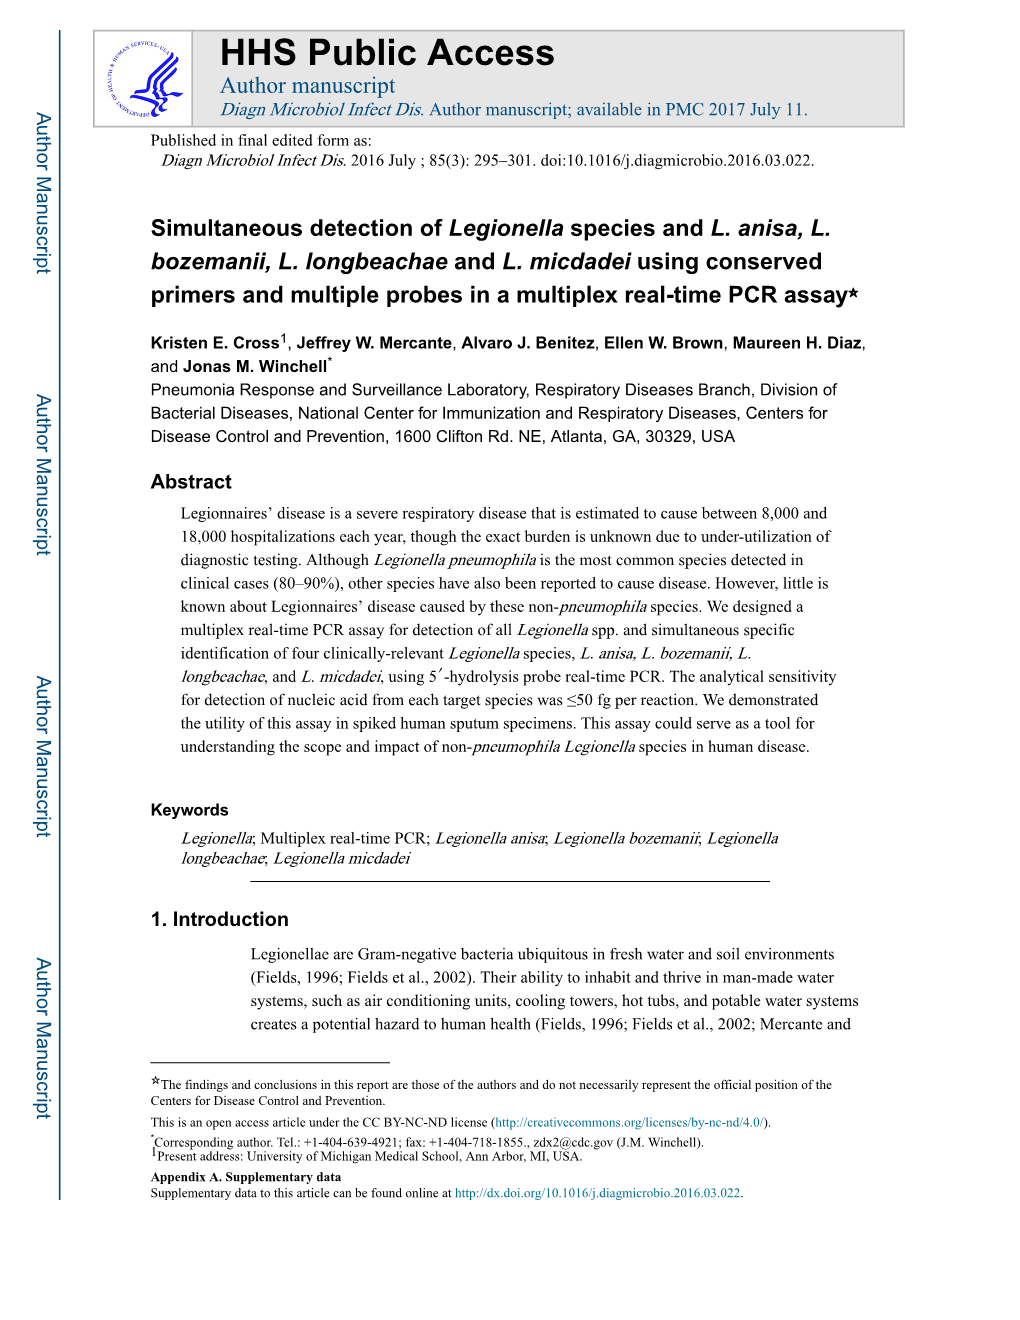 Simultaneous Detection of Legionella Species and L. Anisa, L. Bozemanii, L